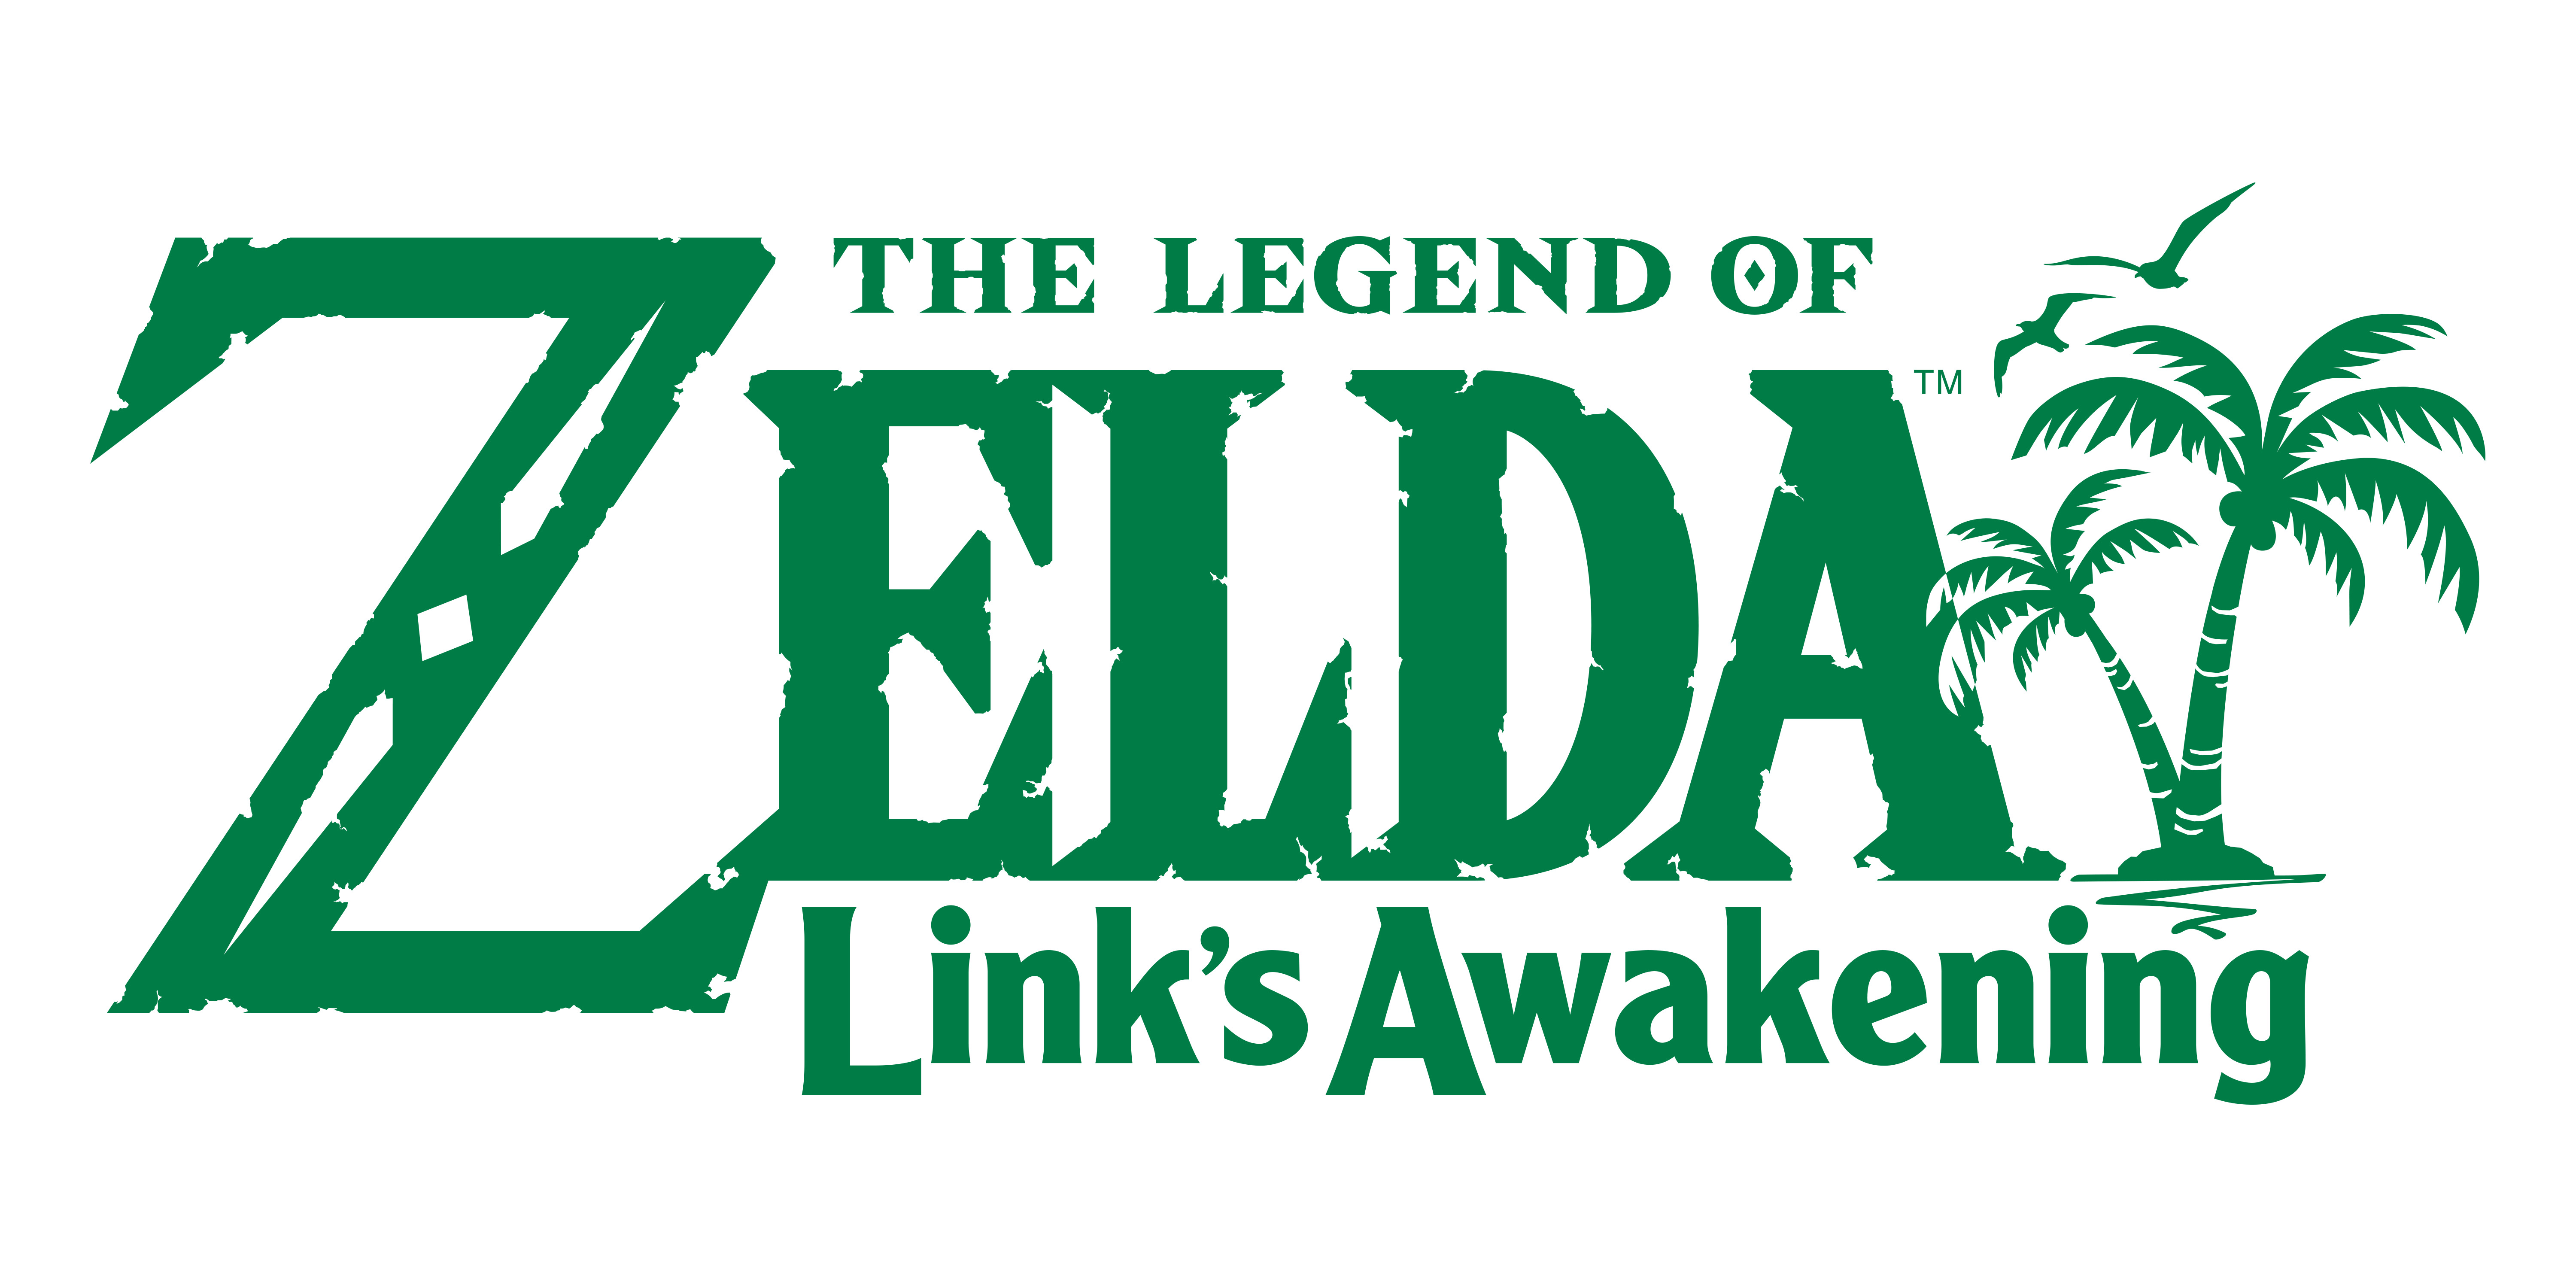 Links-Awakening-Logo.jpg